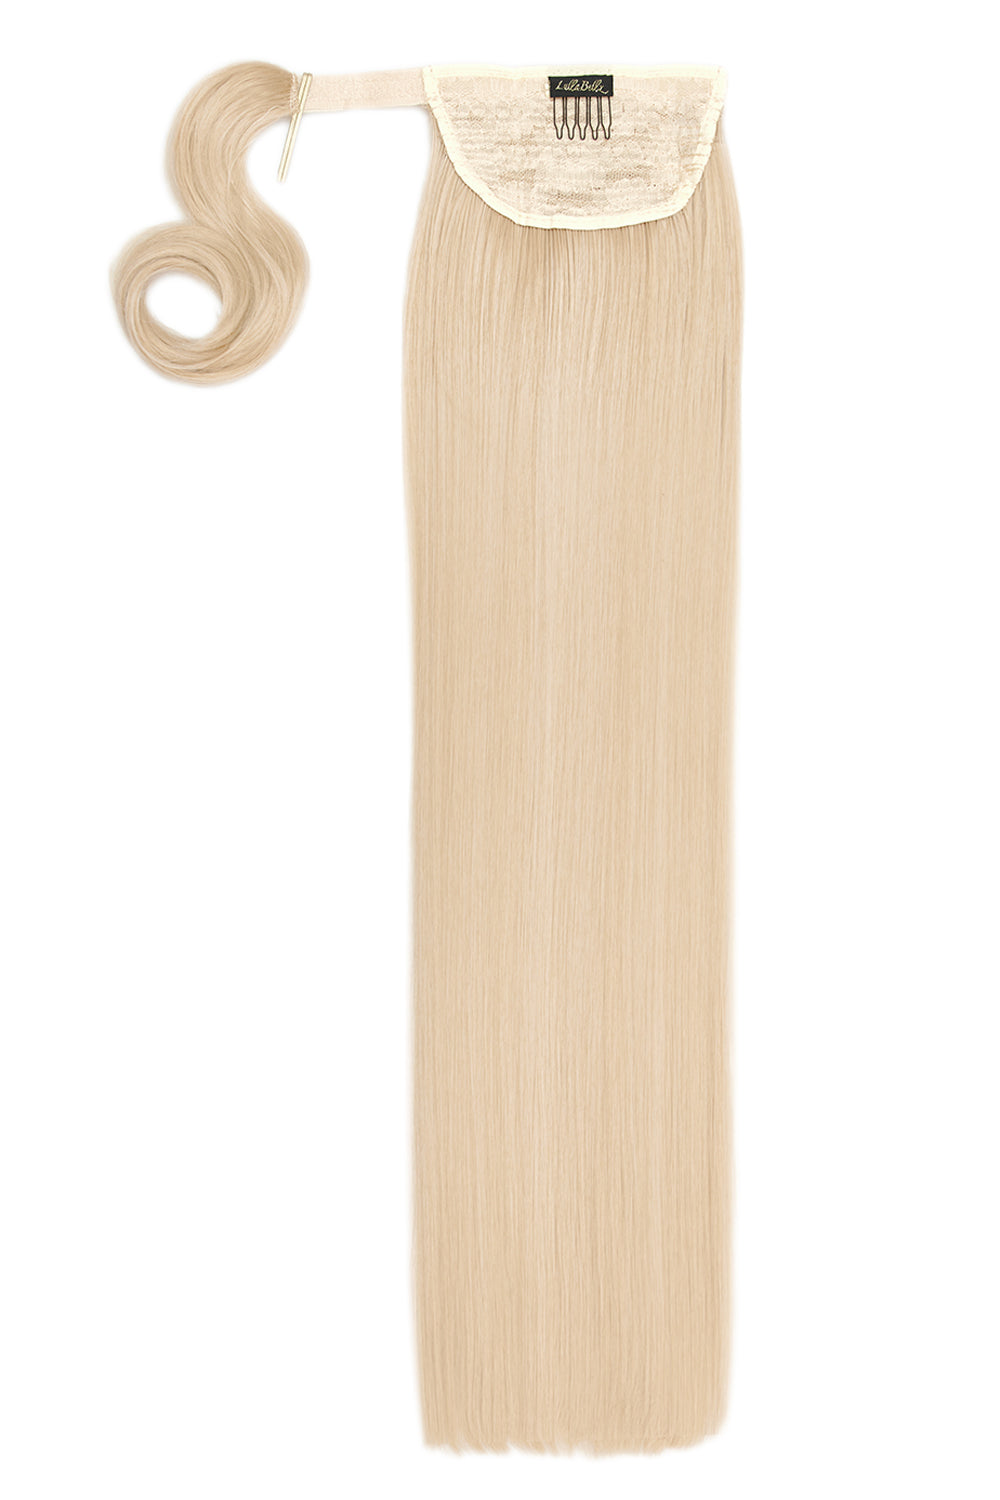 Grande Lengths 26" Straight Wraparound Ponytail - Light Golden Blonde